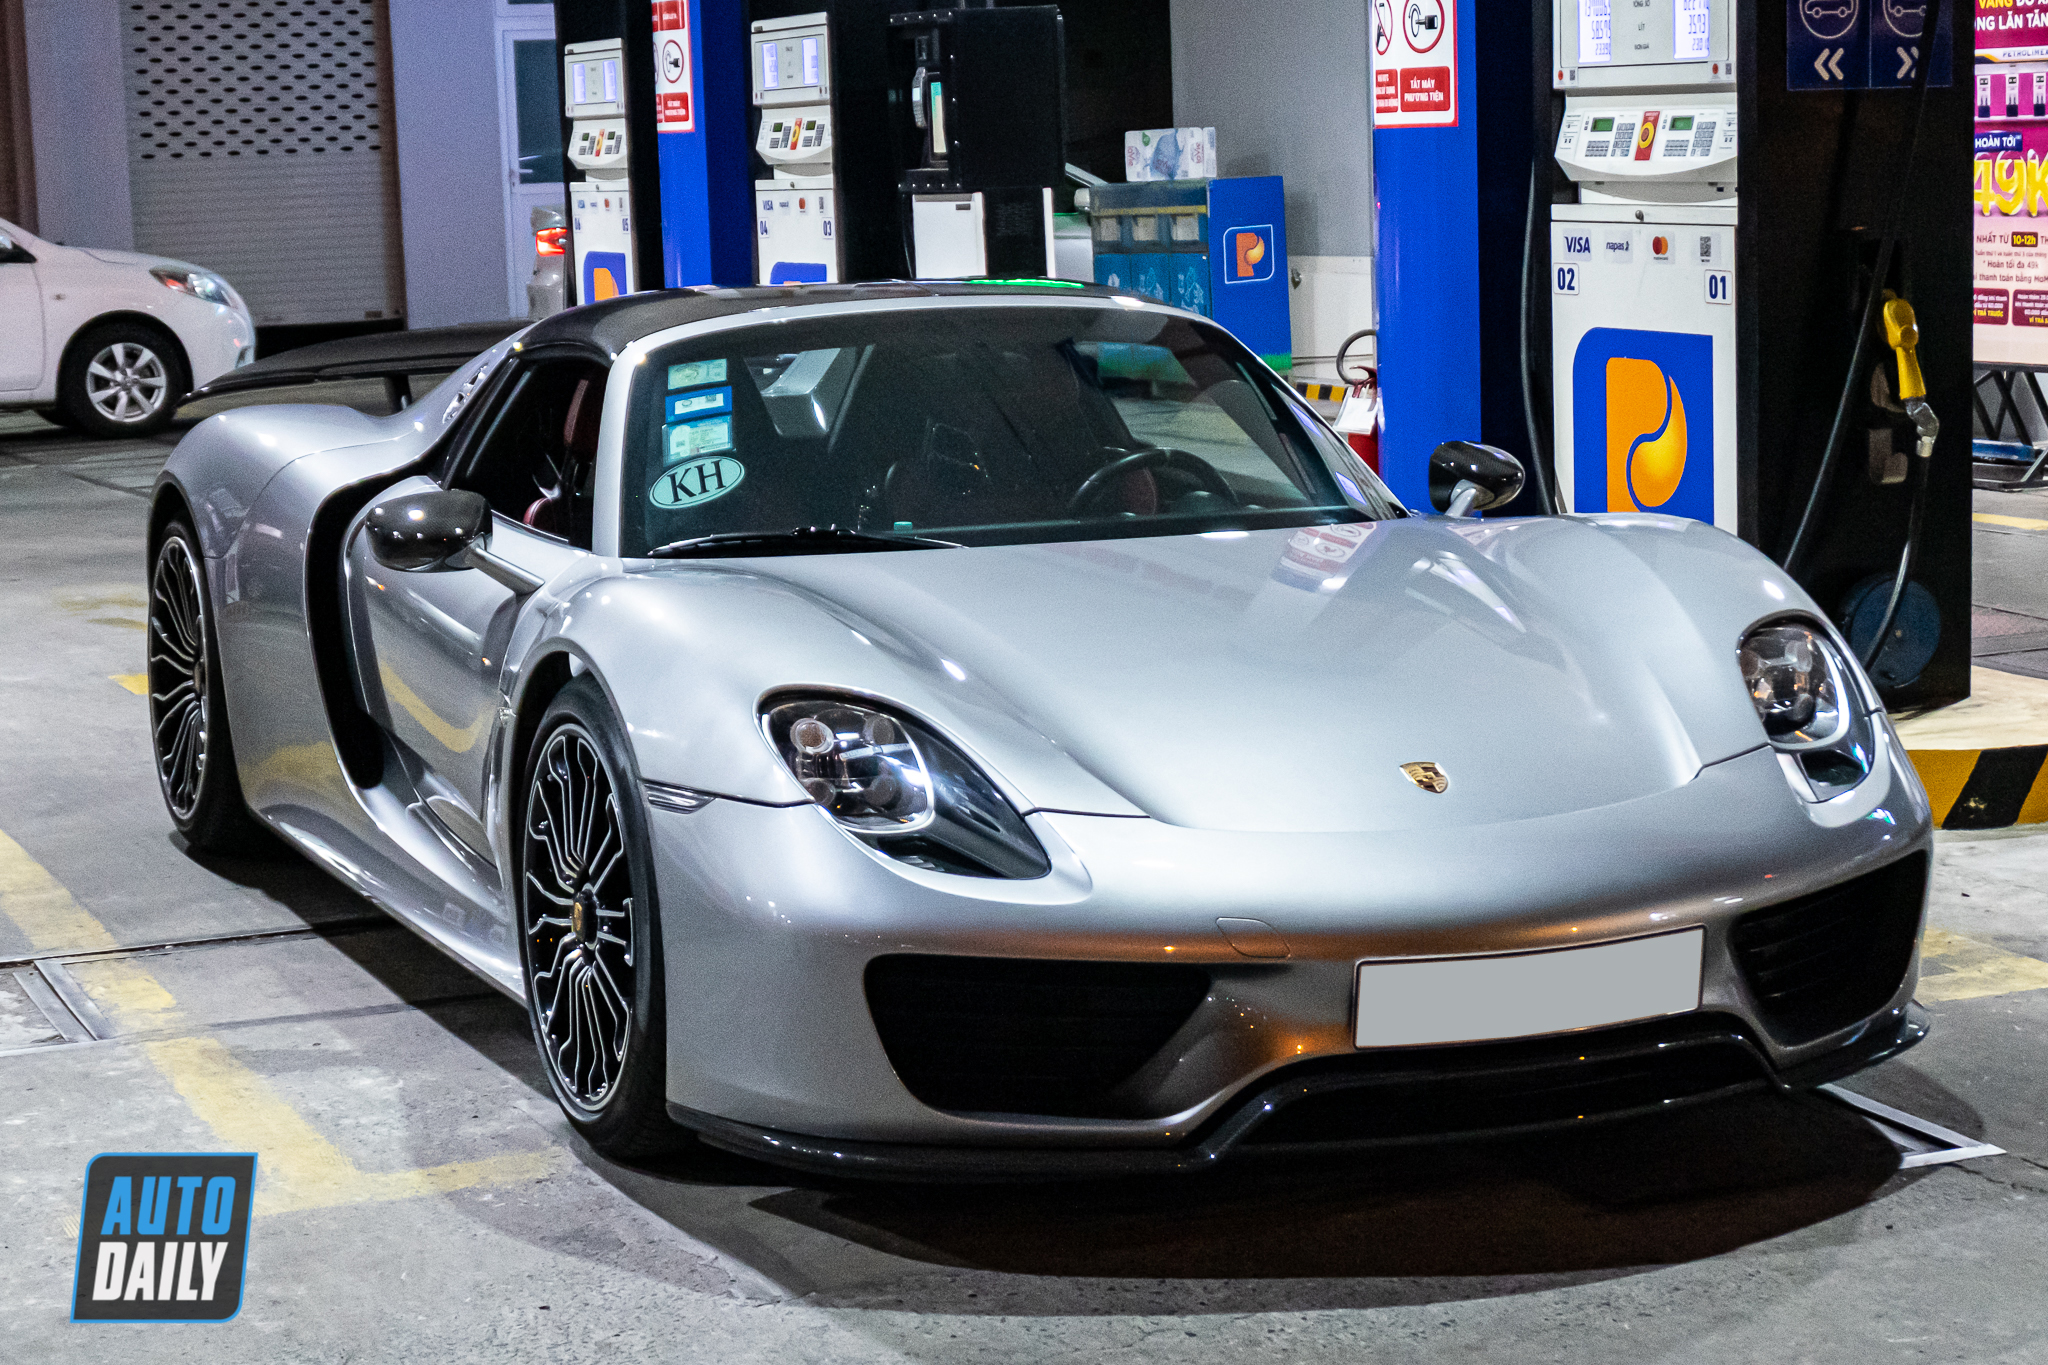 Bắt gặp Porsche 918 Spyder triệu đô của tỷ phú người Việt porsche-918-spyder-autodaily-9.JPG